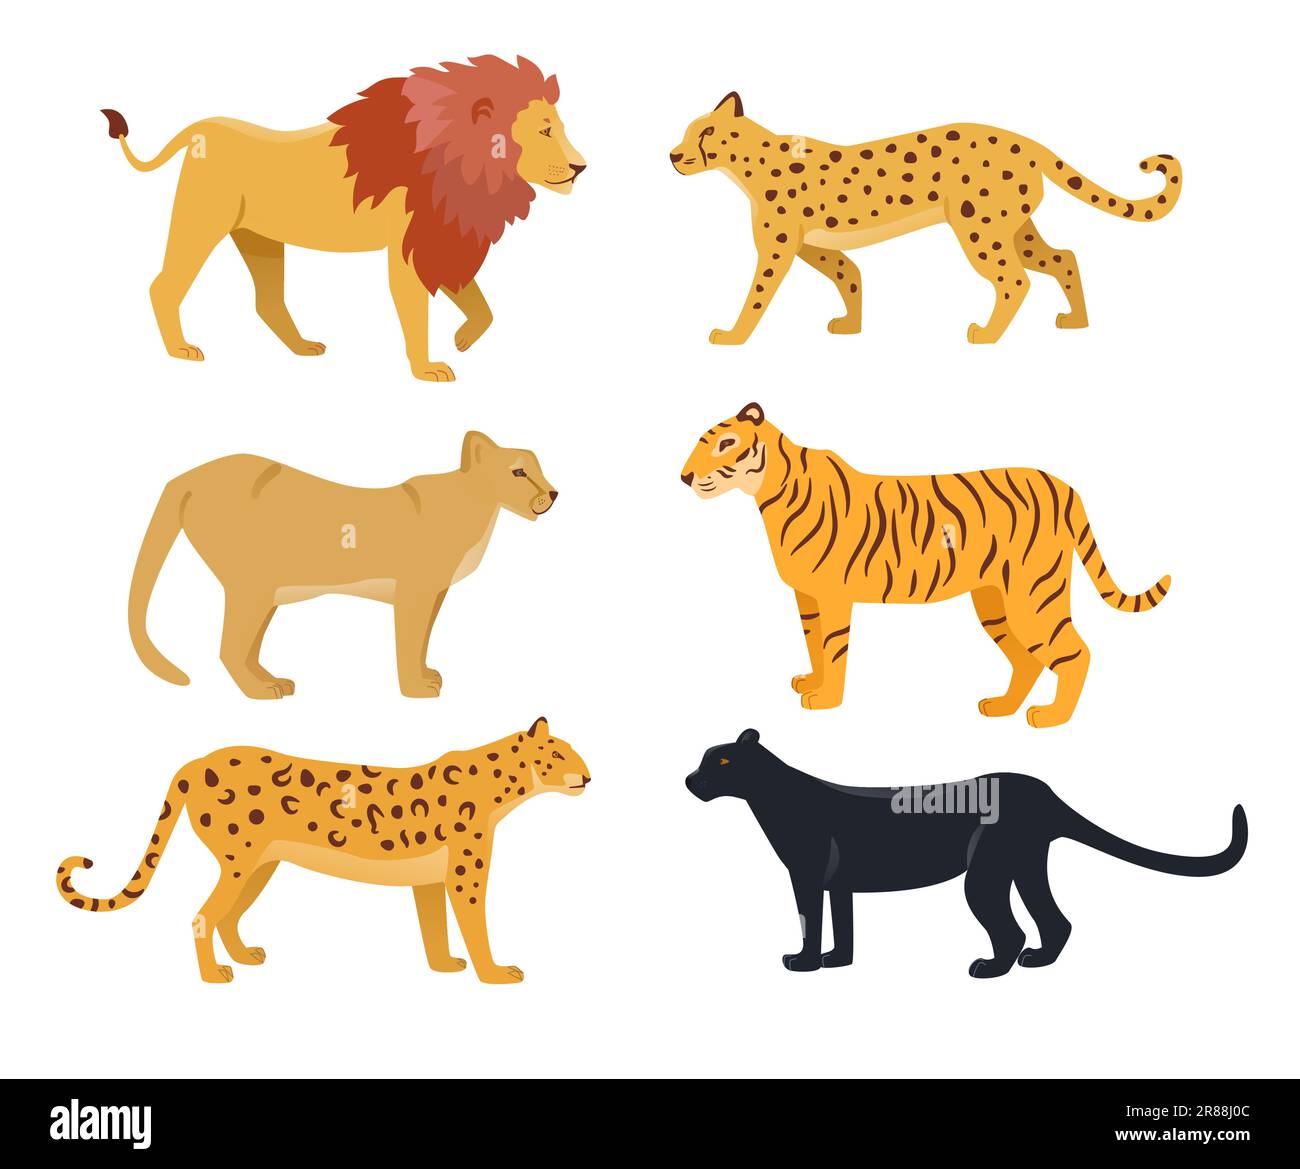 Realistic wild cat cartoon characters vector illustrations set Stock Vector